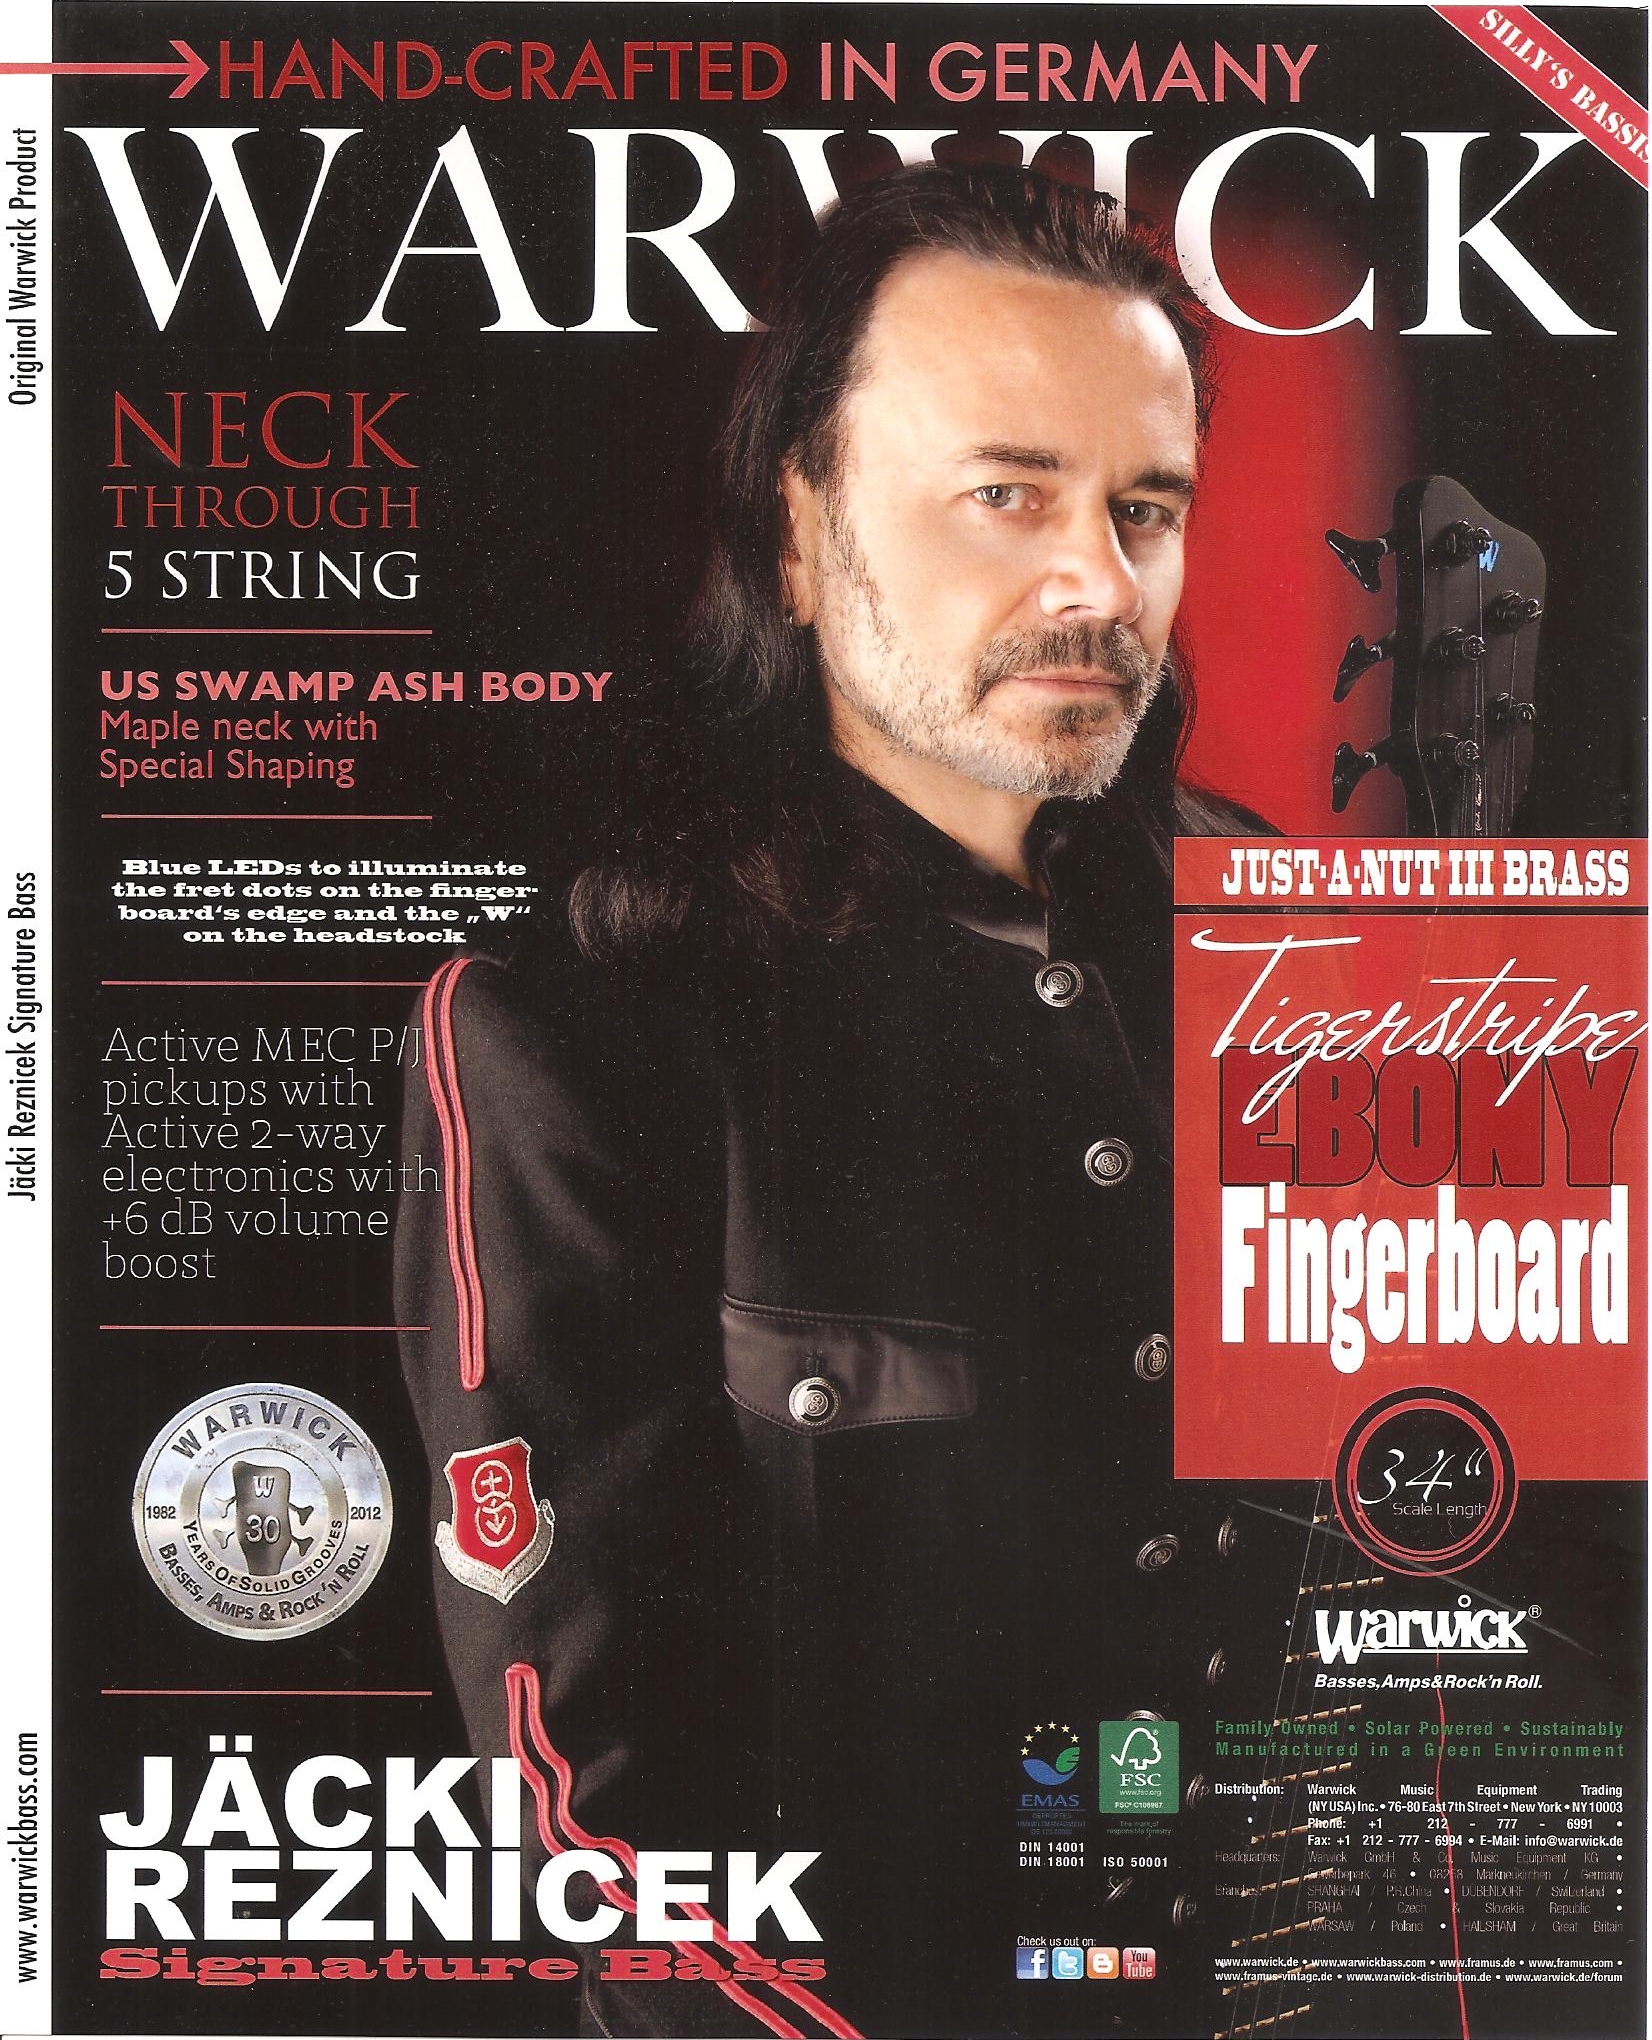 WARWICK Werbung II 2012